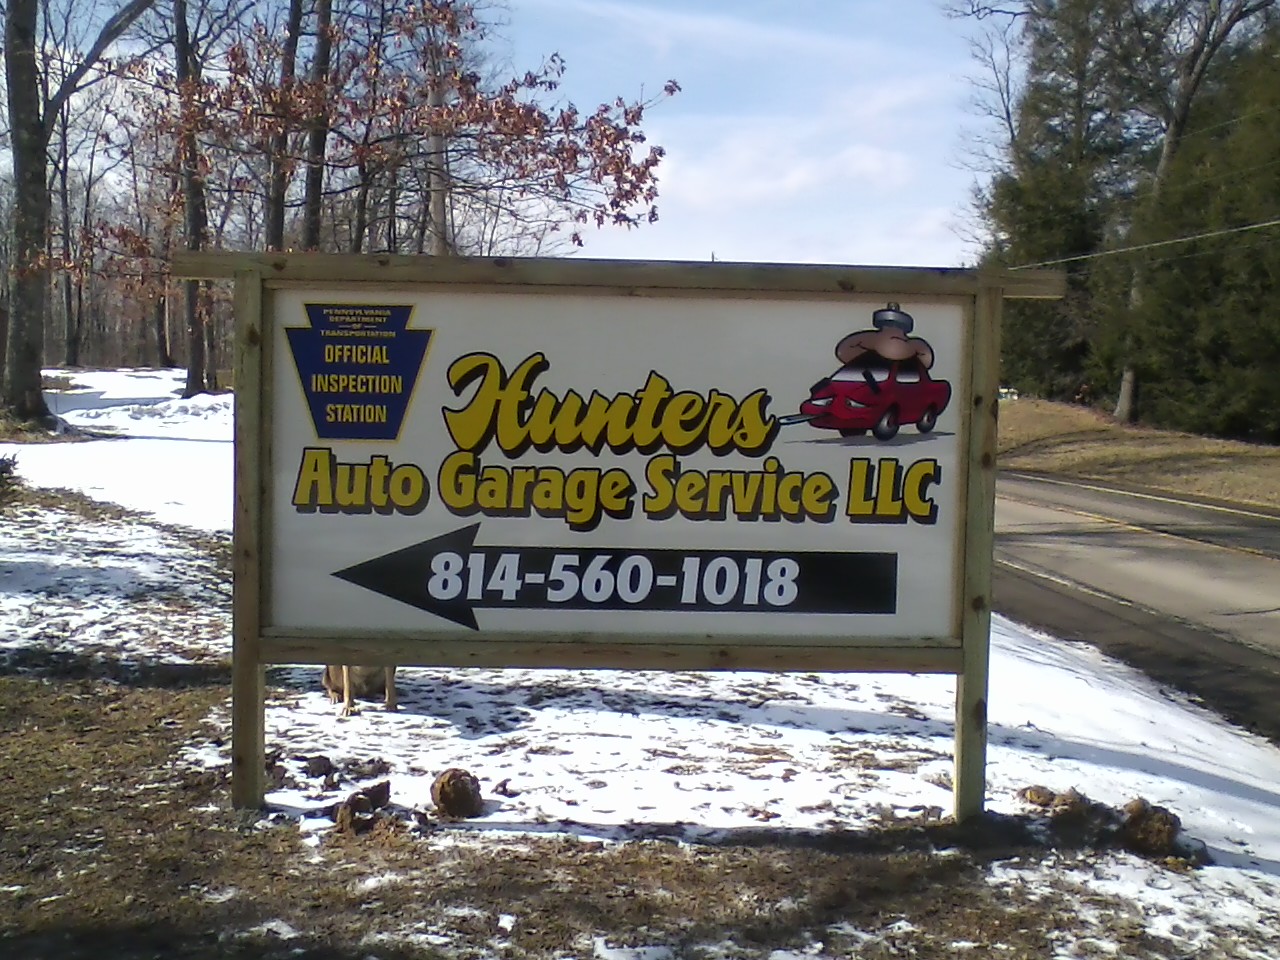 Hunters Auto Garage Service LLC - Tionesta, PA 16353